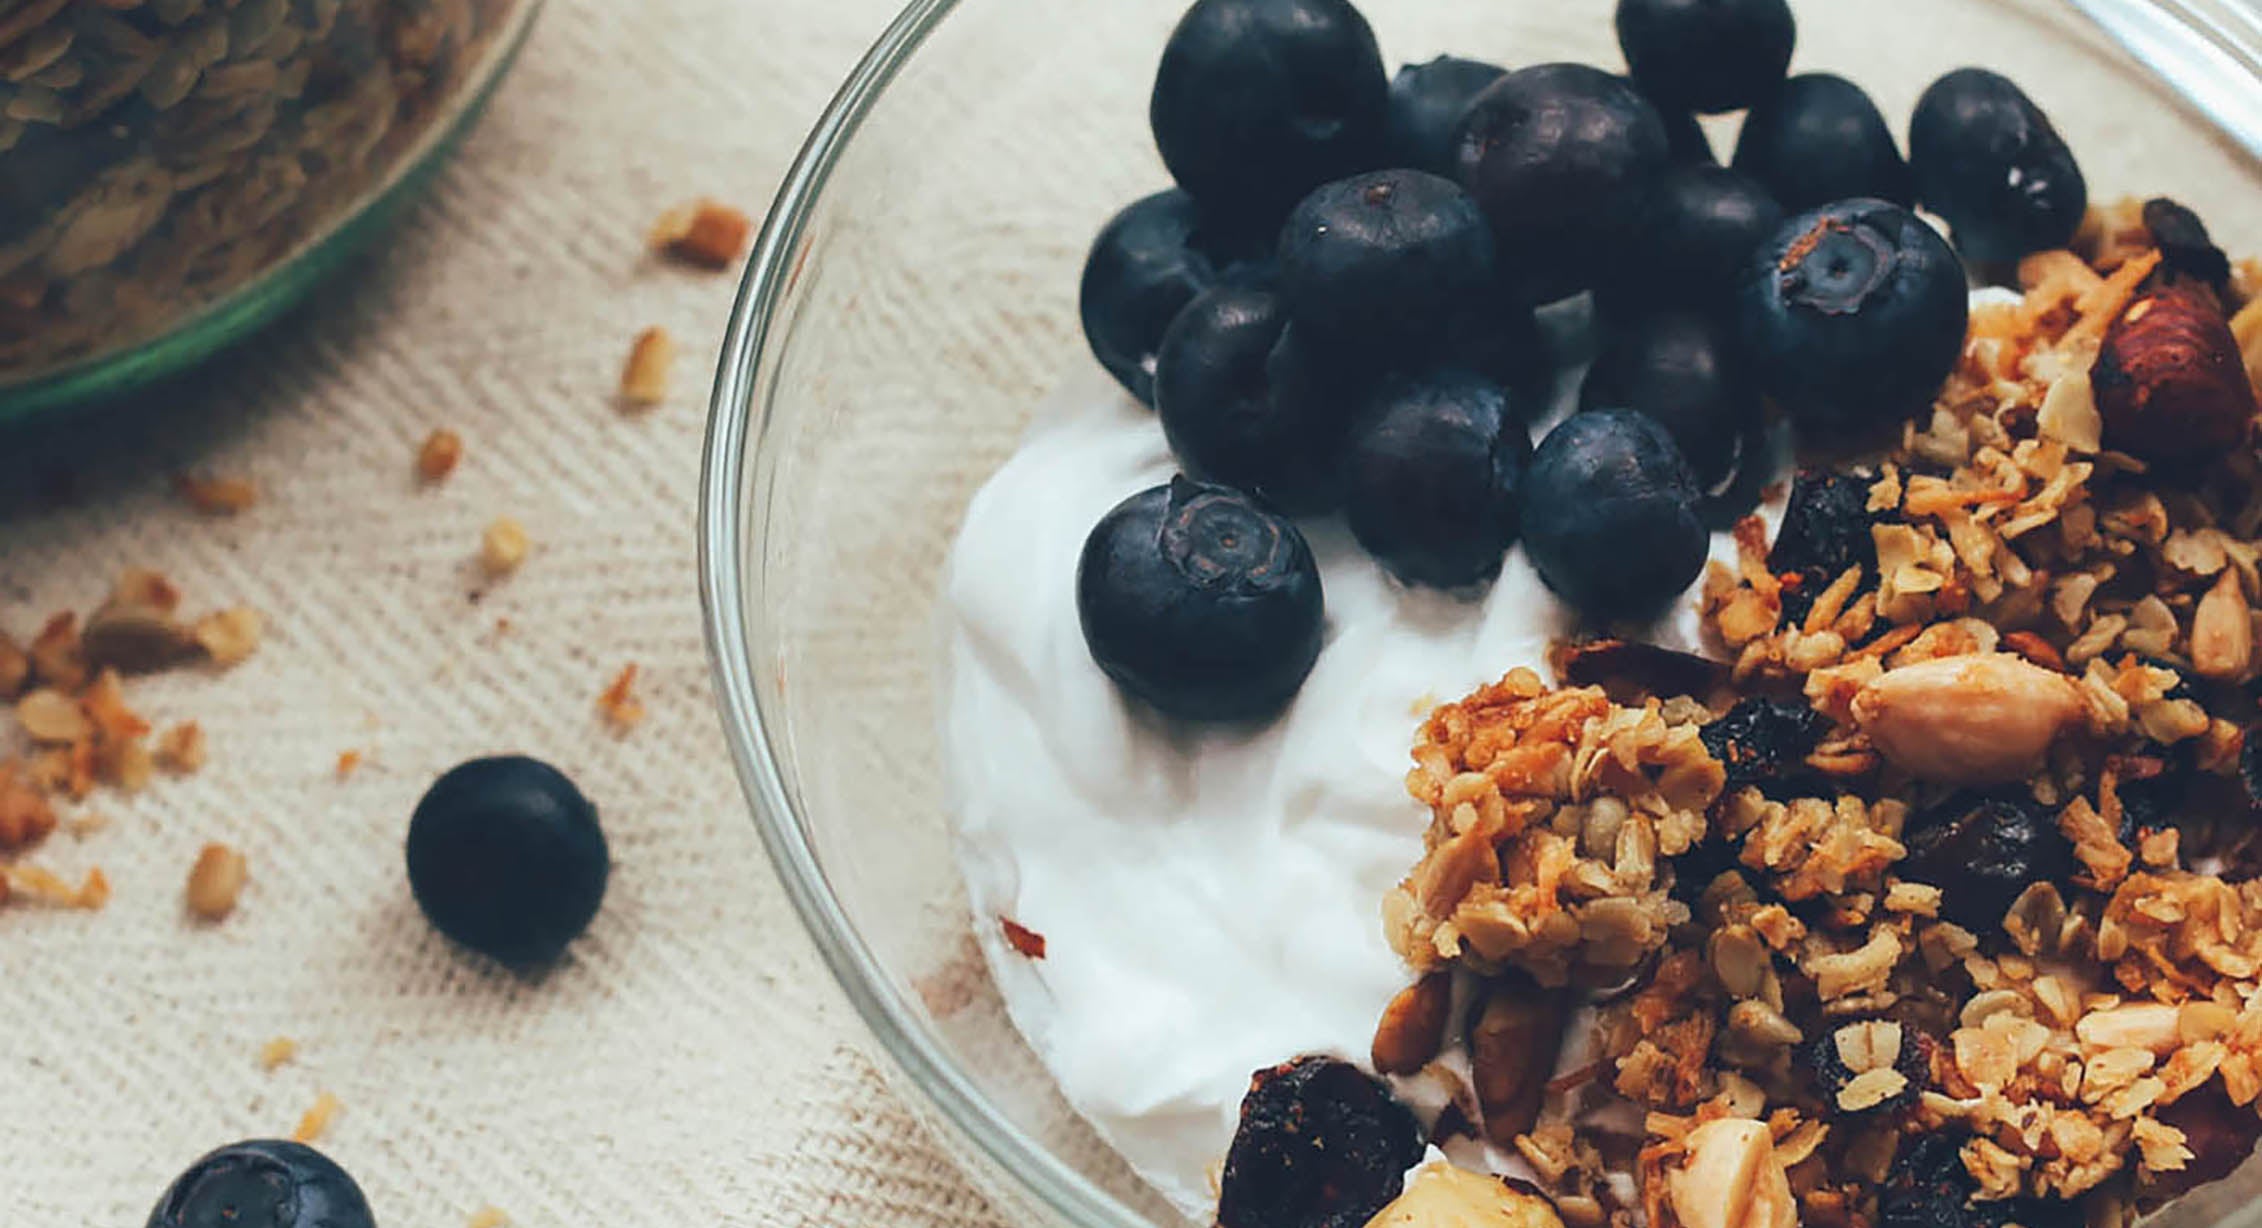 Granola with yogurt and blueberries